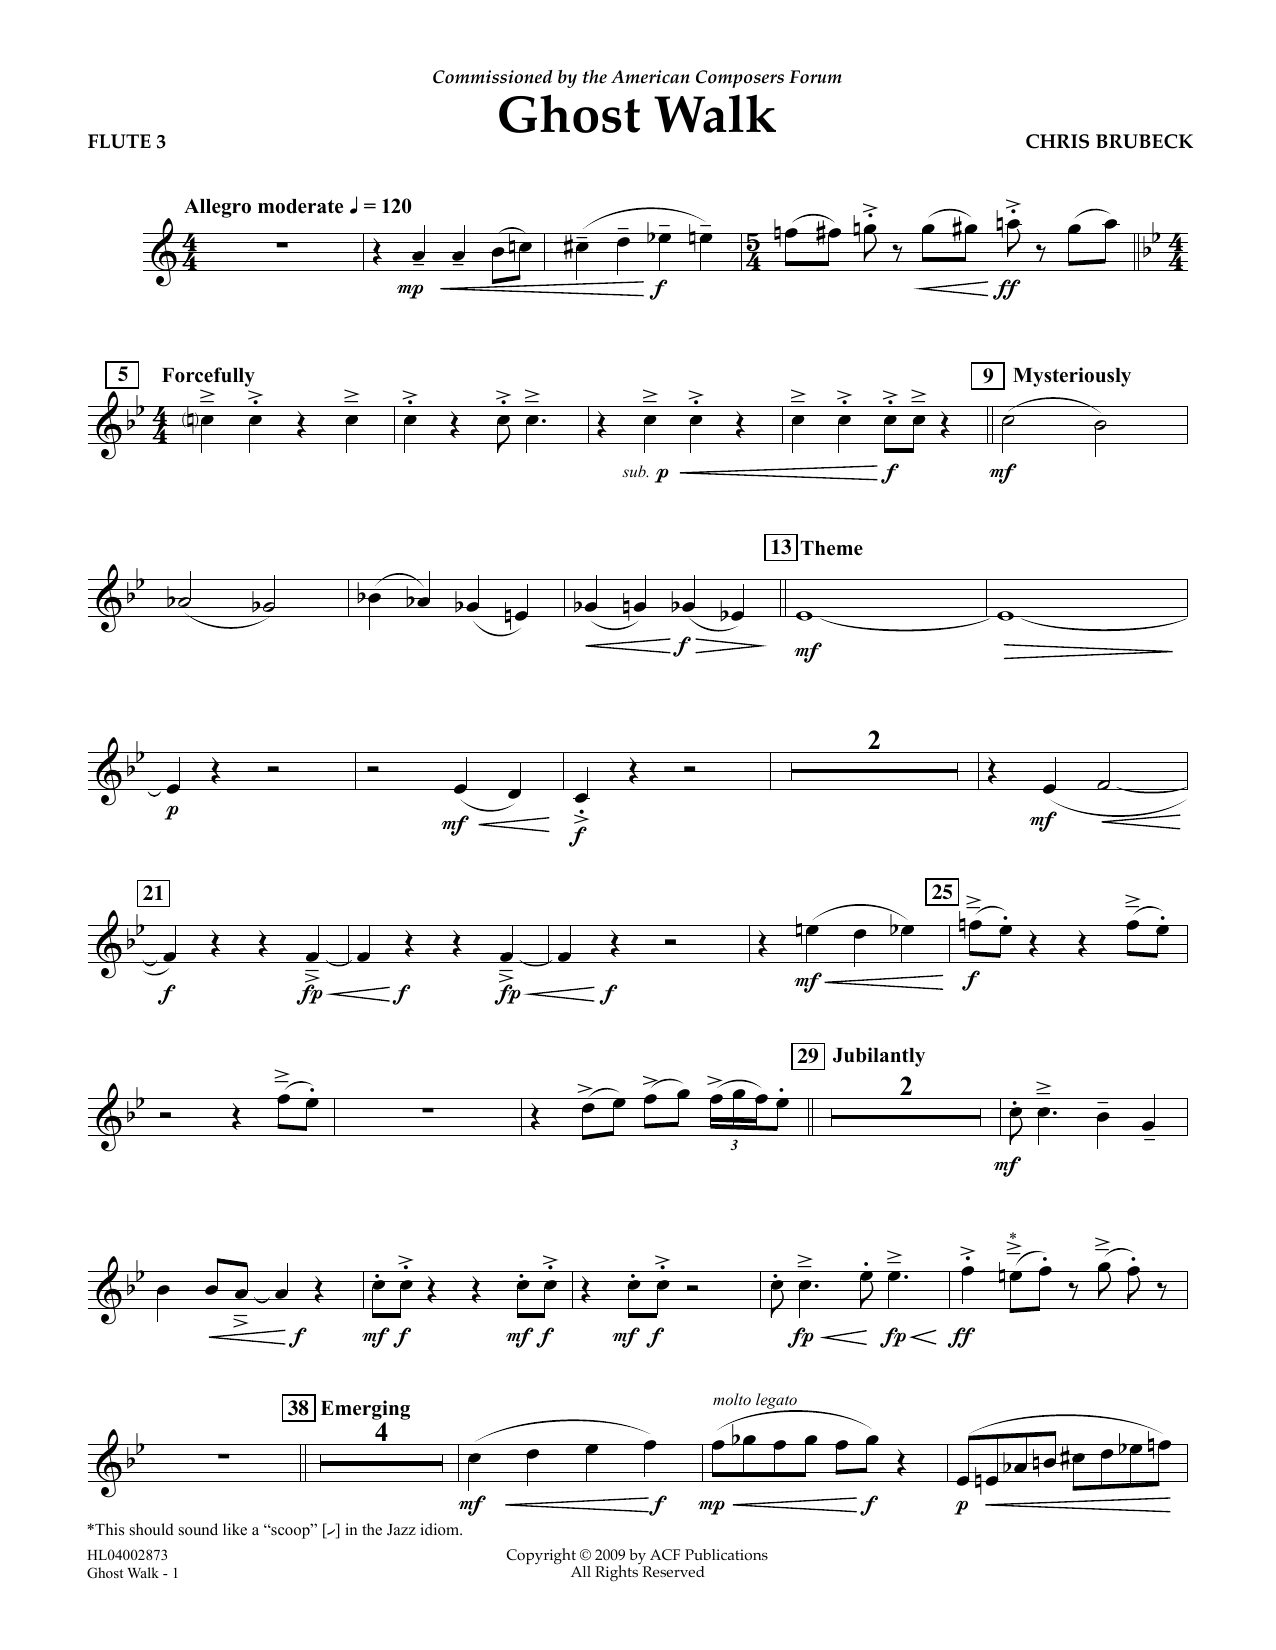 Chris Brubeck Ghost Walk - Flute 3 Sheet Music Notes & Chords for Concert Band - Download or Print PDF